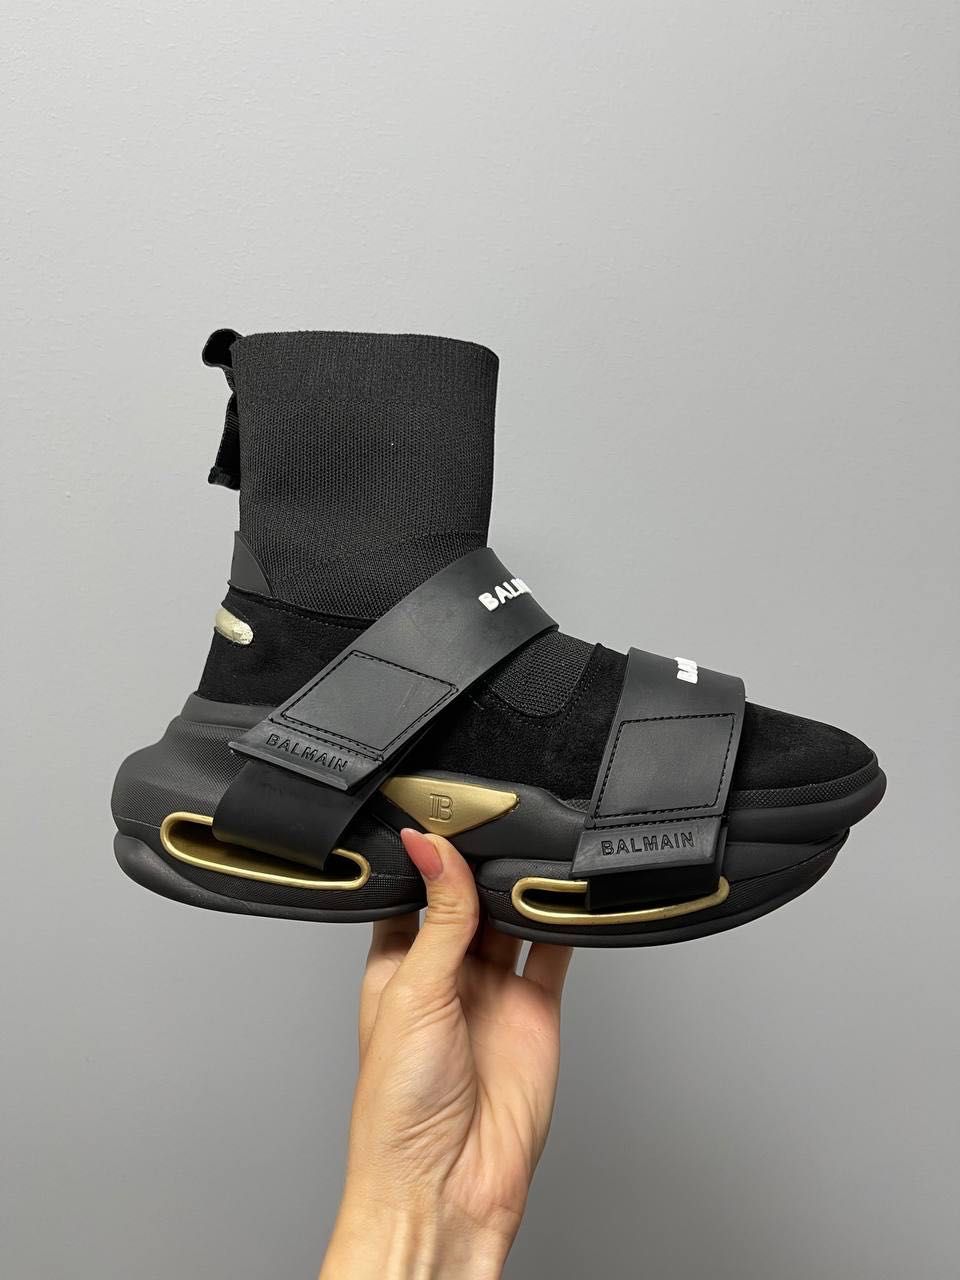 Balmain B-Bold Sneakers ‘Black Gold’ Buty damskie trampki 36-40